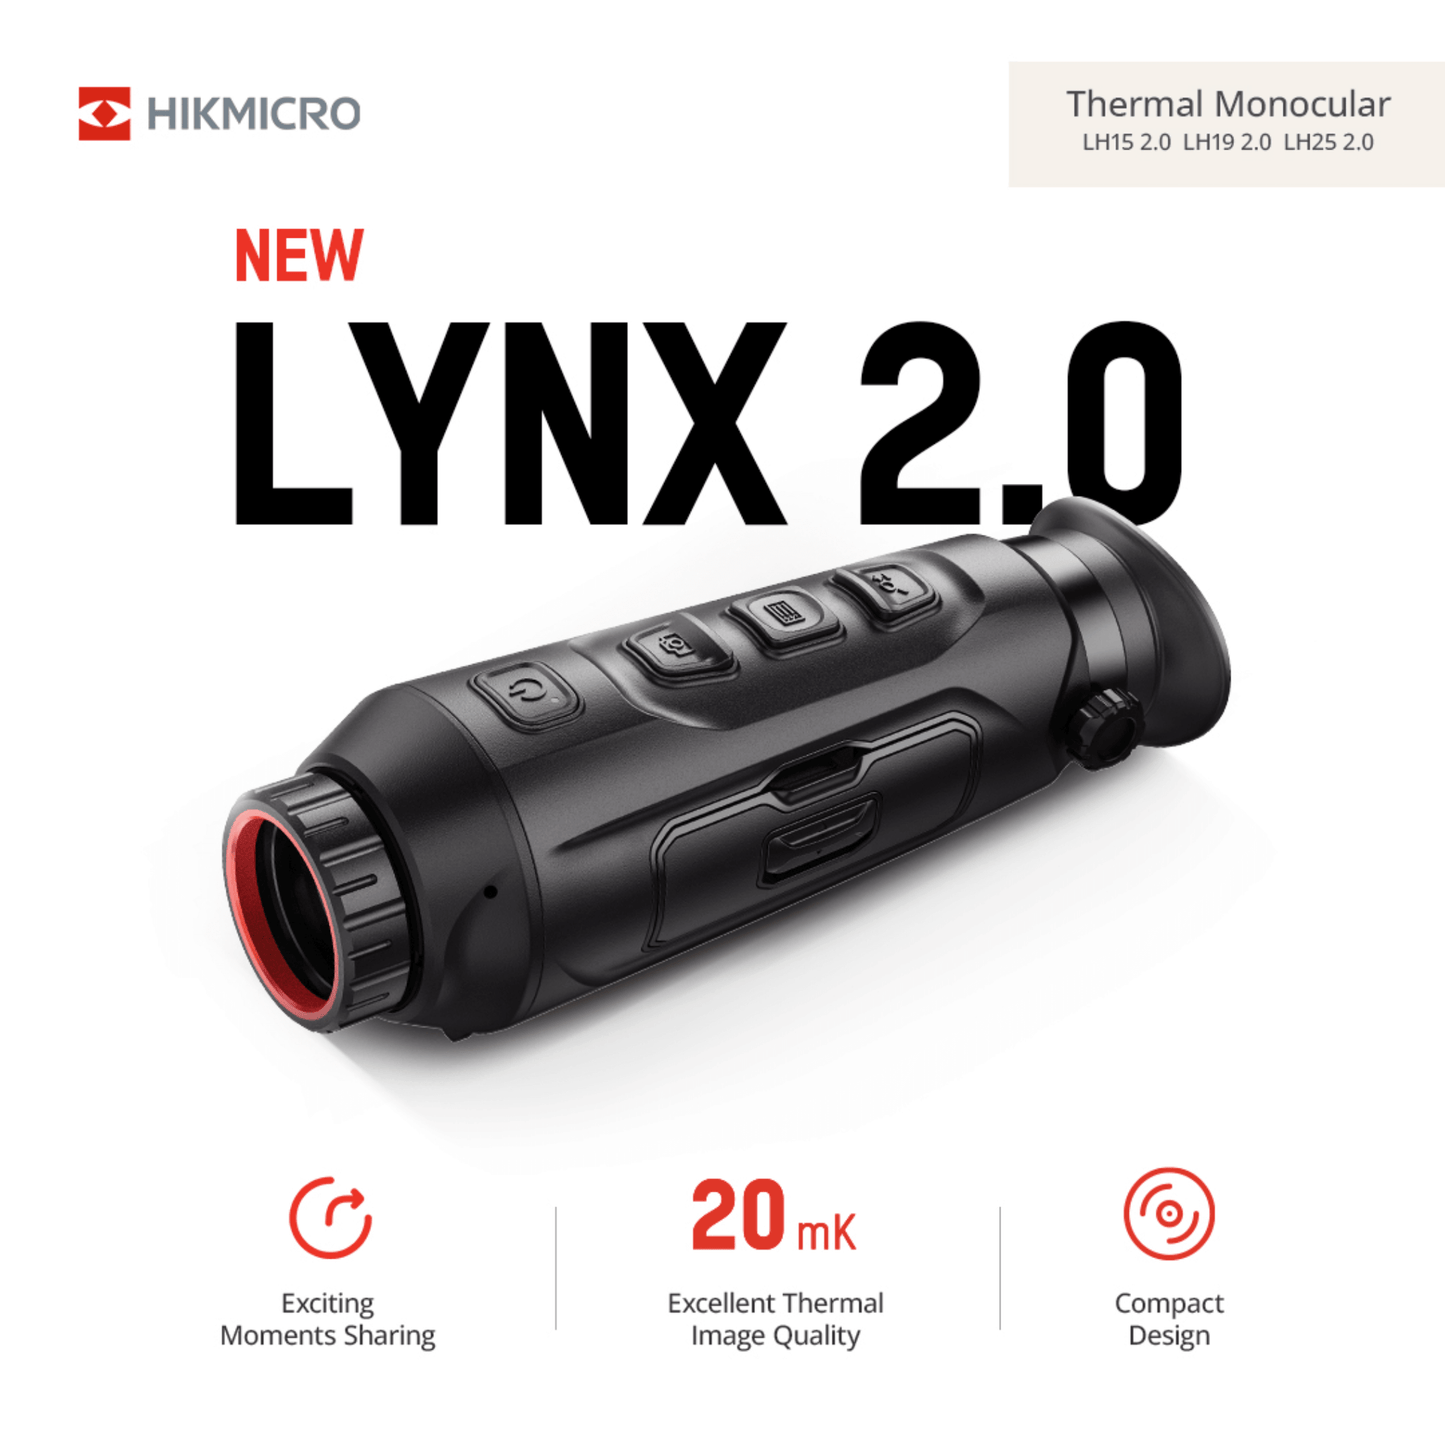 HikMicro Lynx LH25 2.0 Monocular product banner